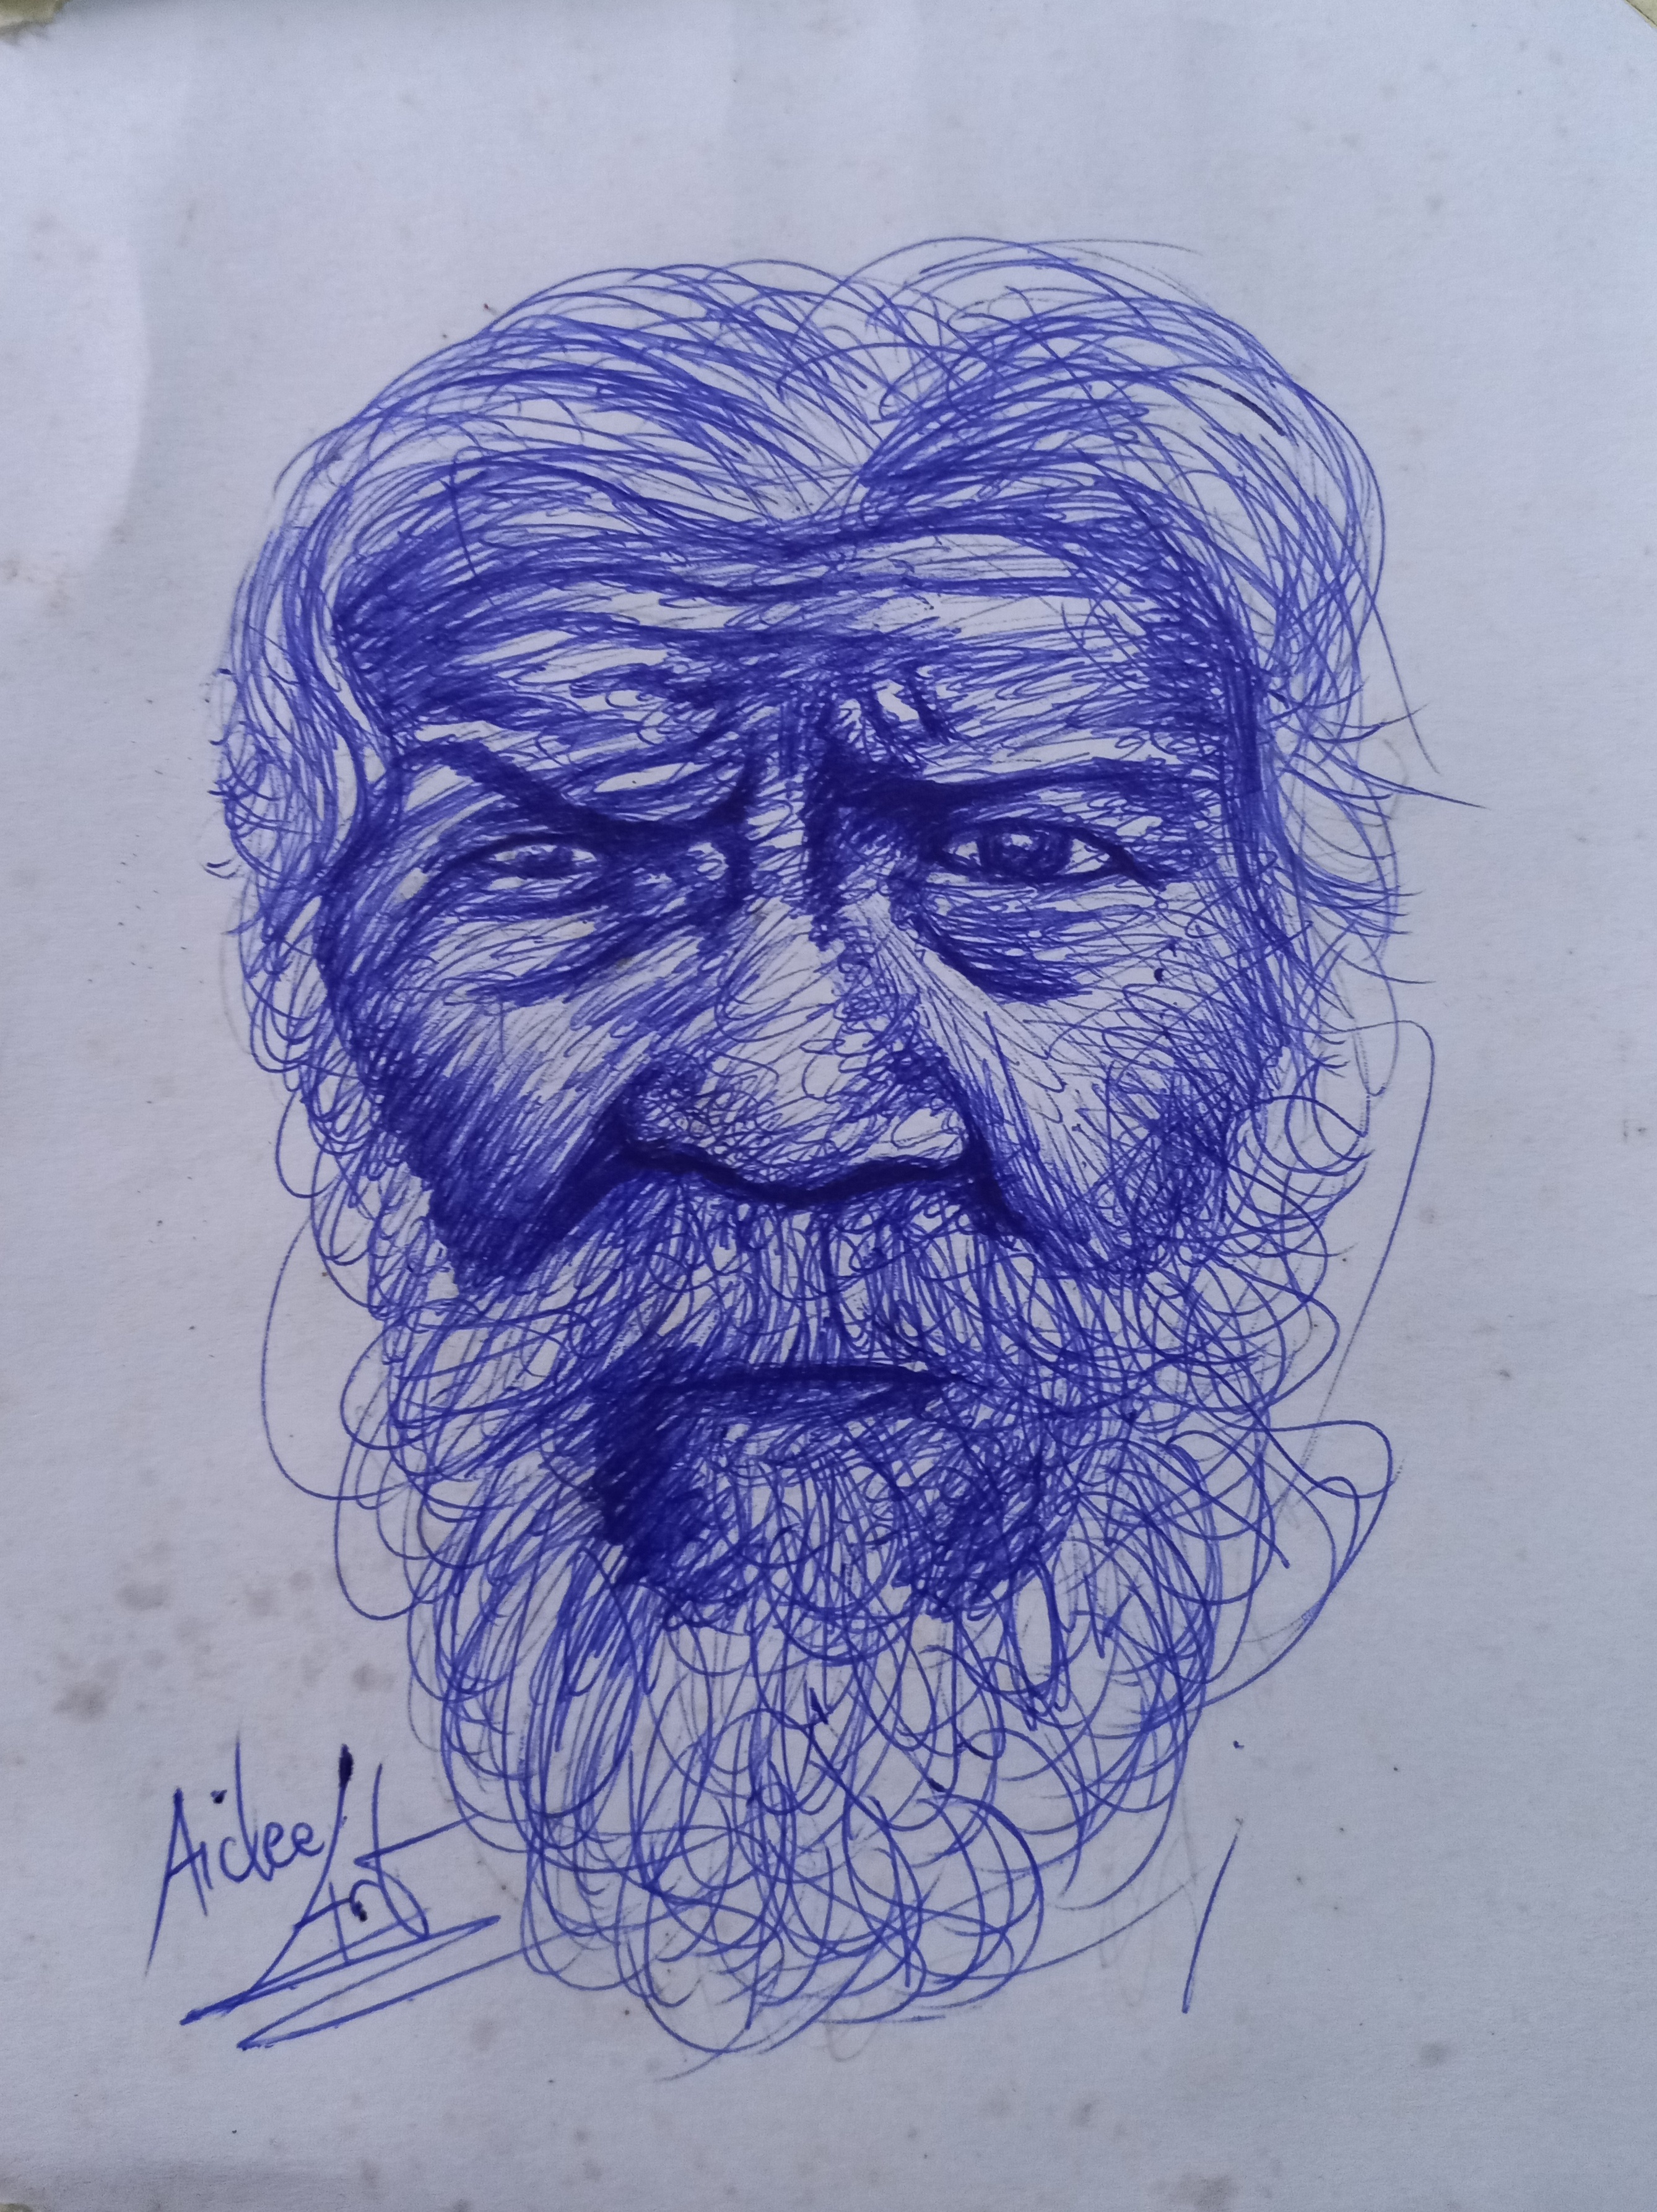 Scowling Elderly Man with Full Beard (x1948-1306)